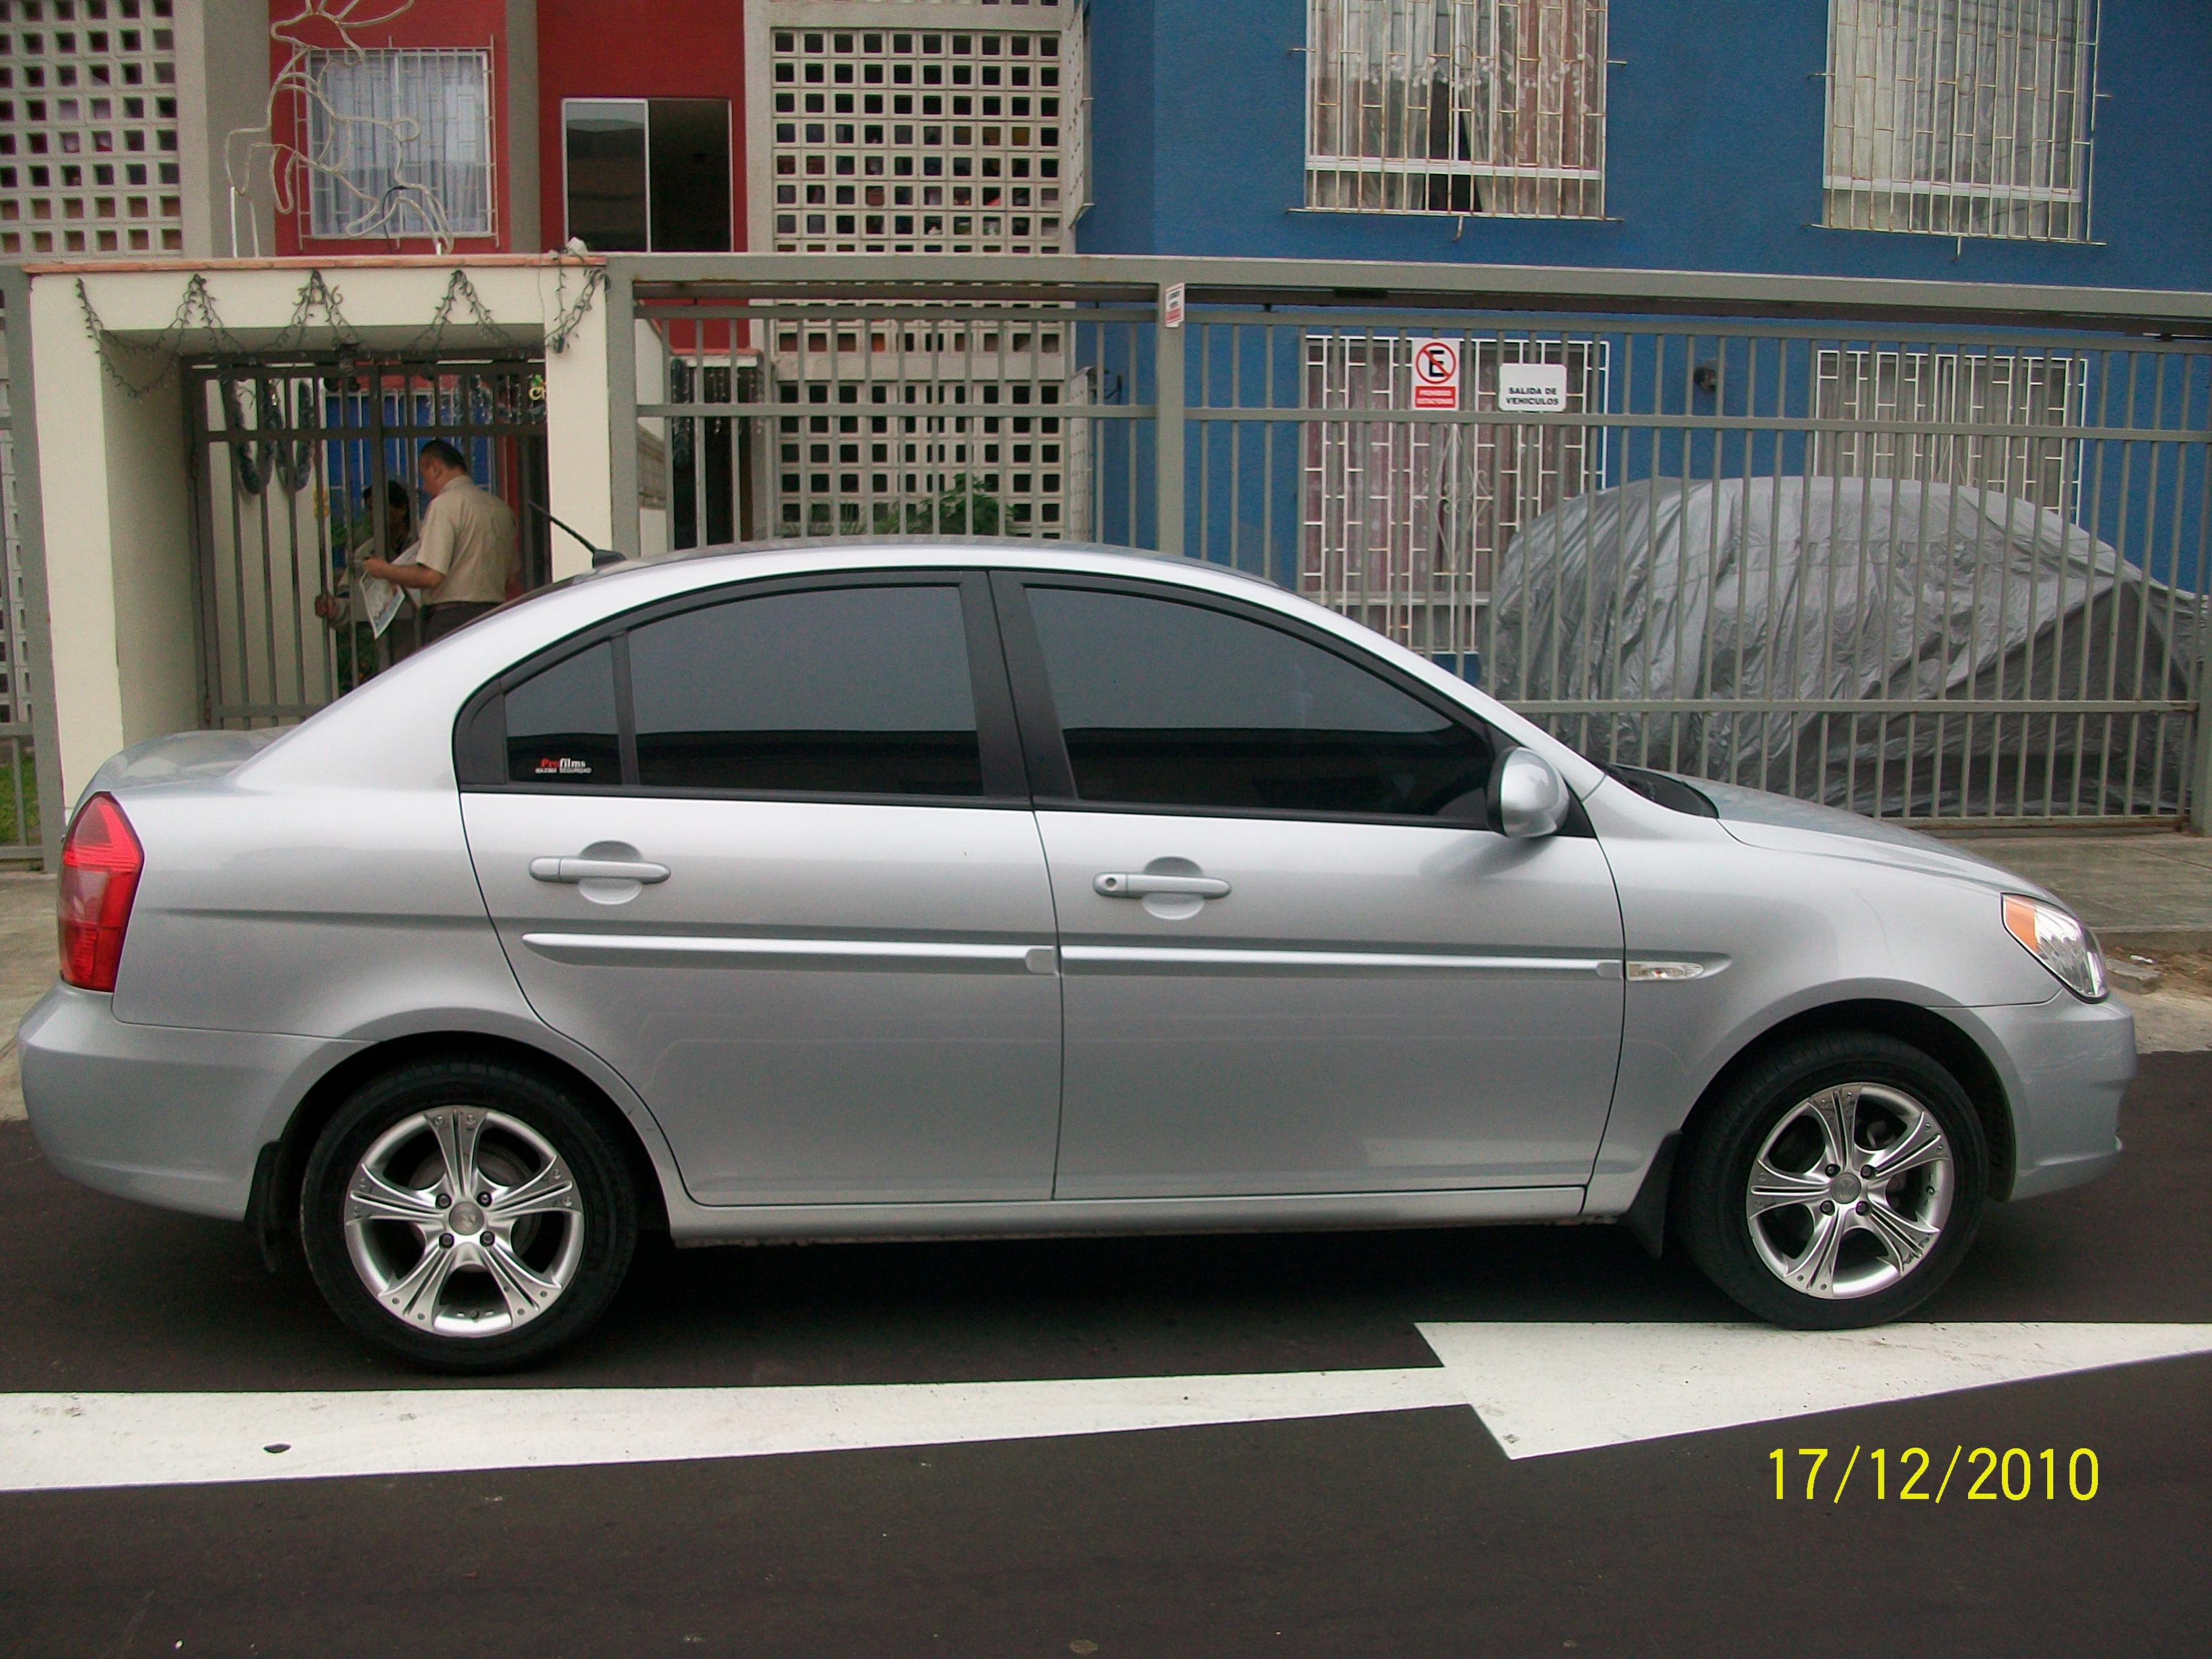 2008 Hyundai Accent Information and photos MOMENTcar